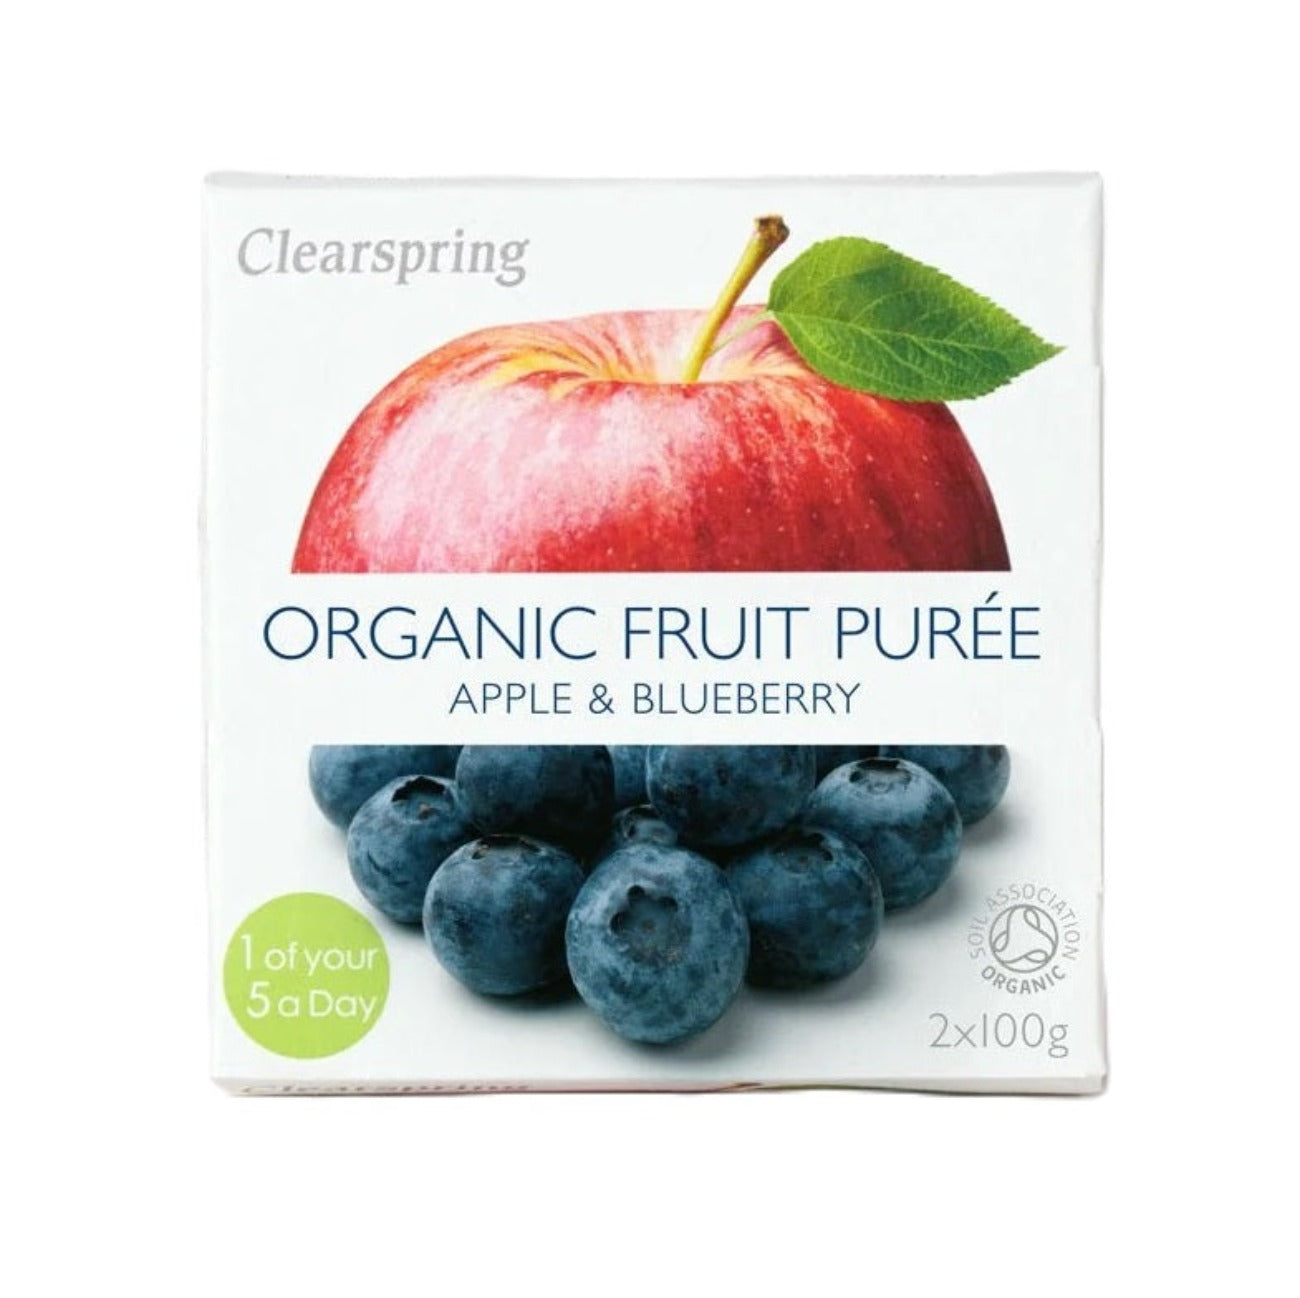 Organic Apple and Blueberry Fruit Puree 2x100g